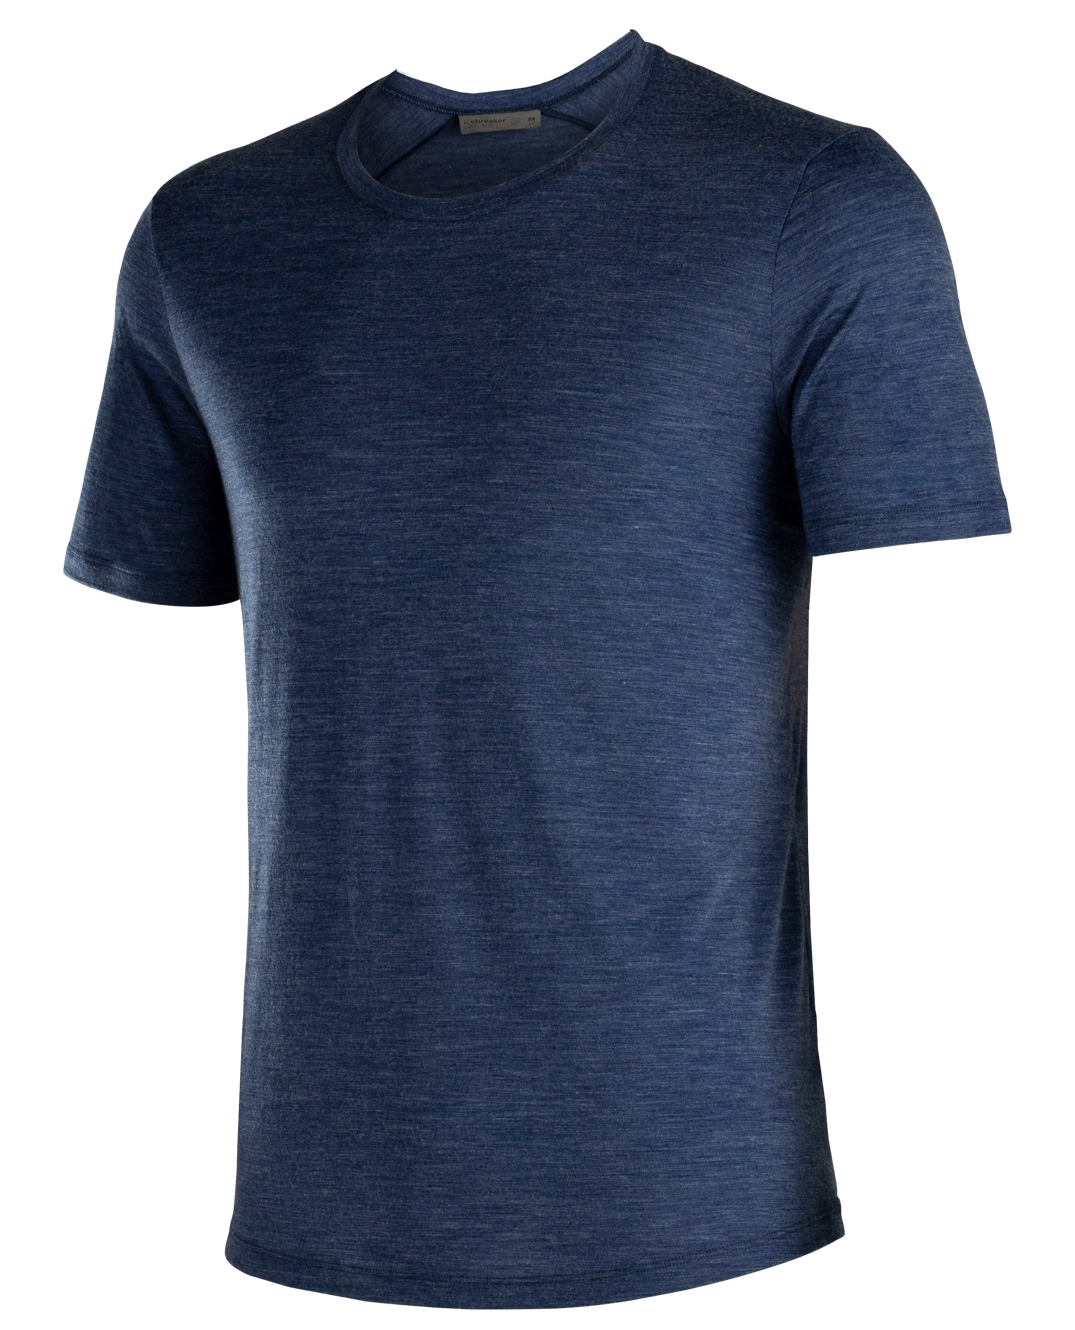 Men's Cool-Lite™ Merino Sphere Short Sleeve Crewe T-Shirt in Midnight Navy